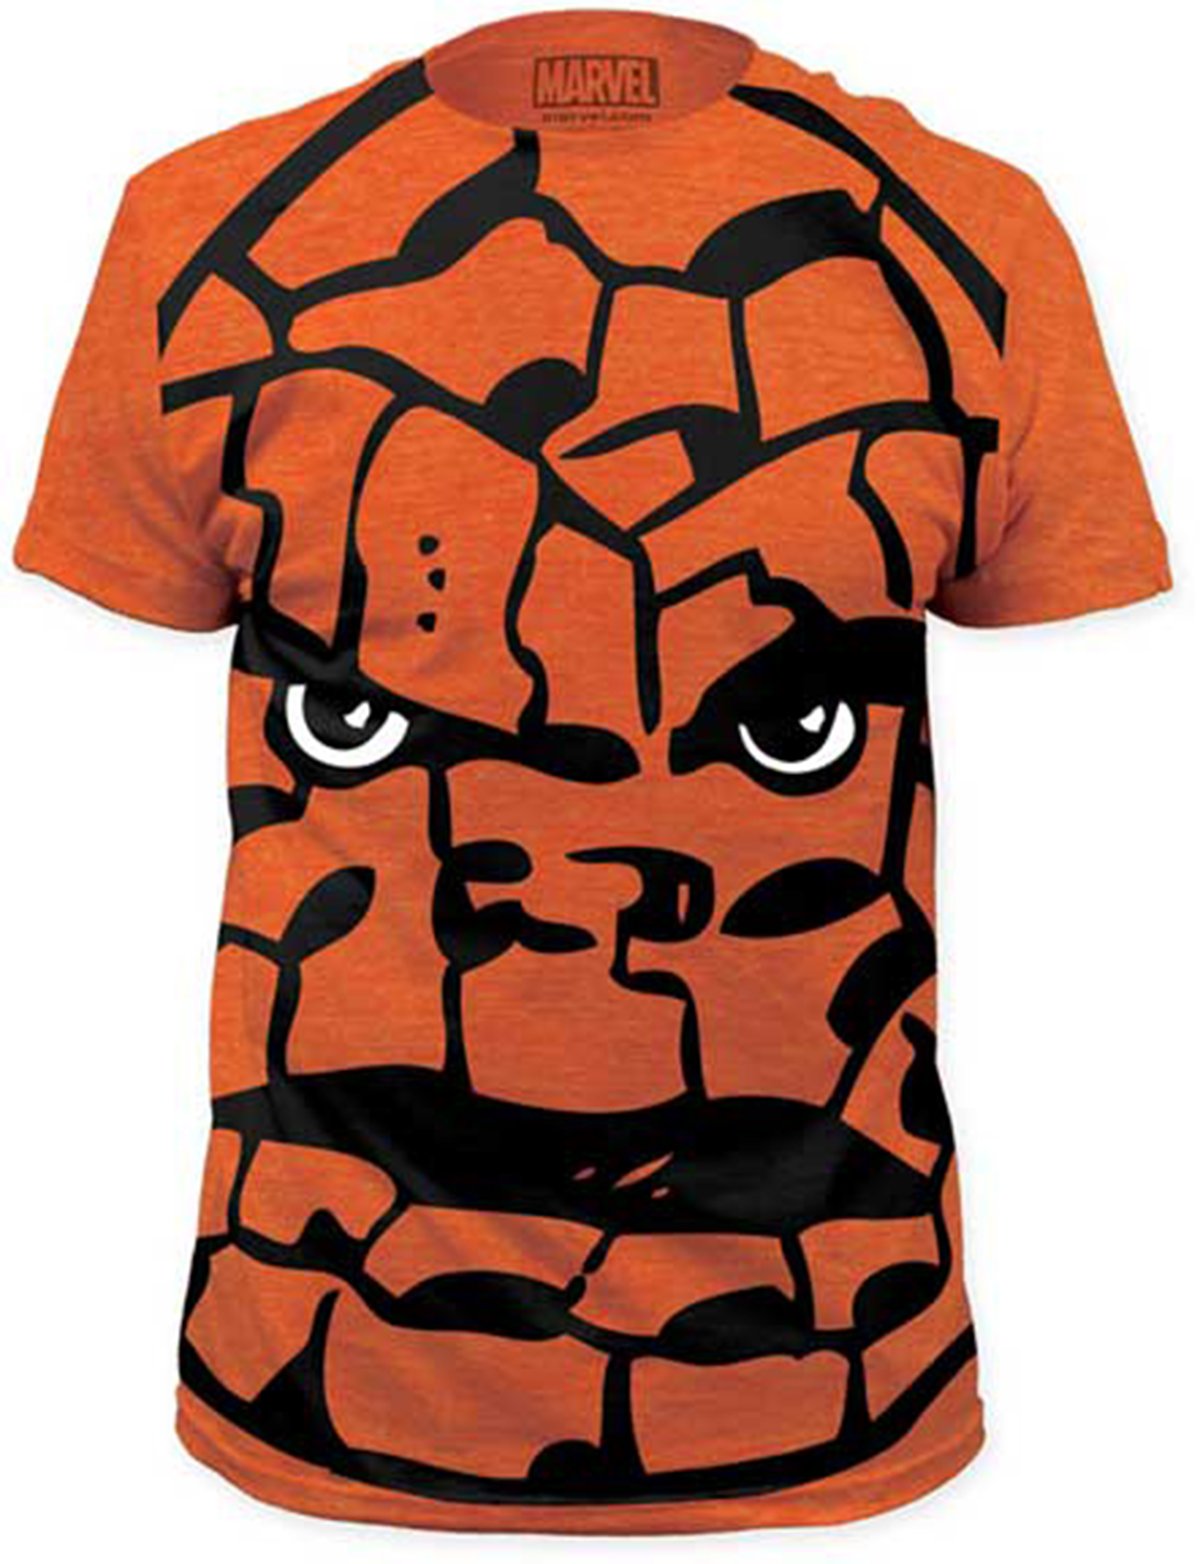 Thing (Marvel Comics) Mens T-Shirt - Giant Ben Grimm Rock Face Image